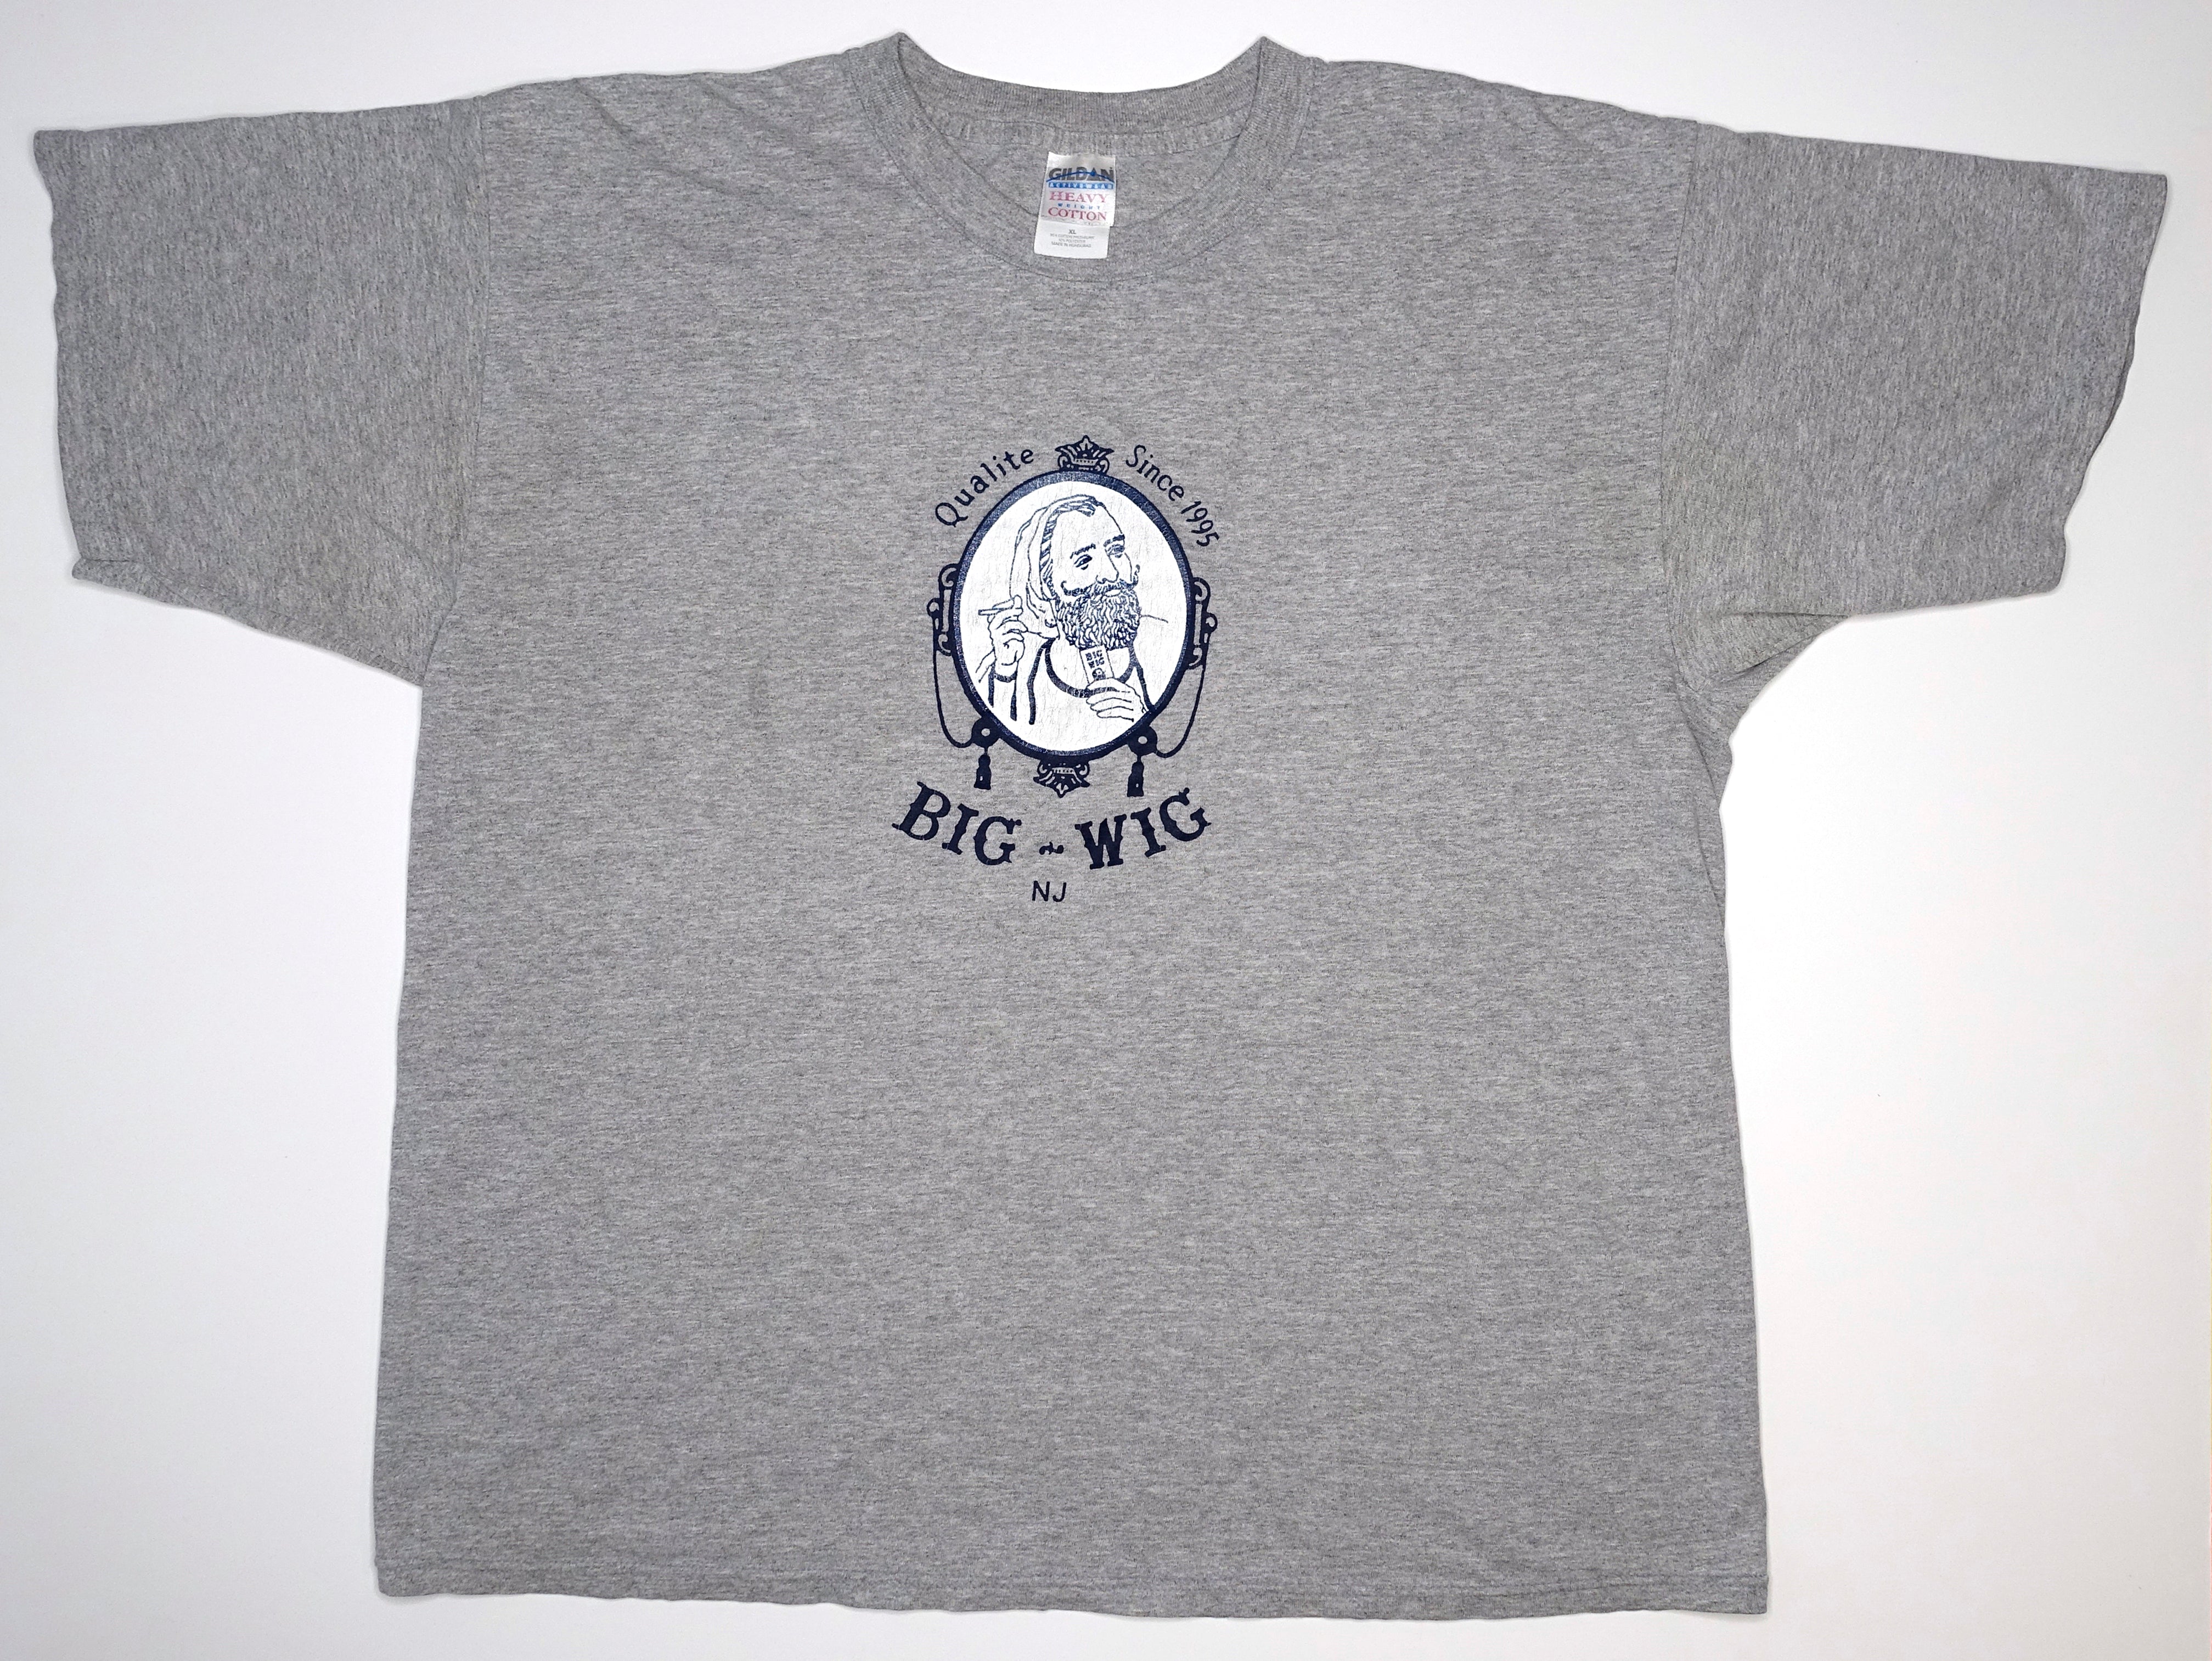 Bigwig – Qualite Since 1995 Tour Shirt Size XL